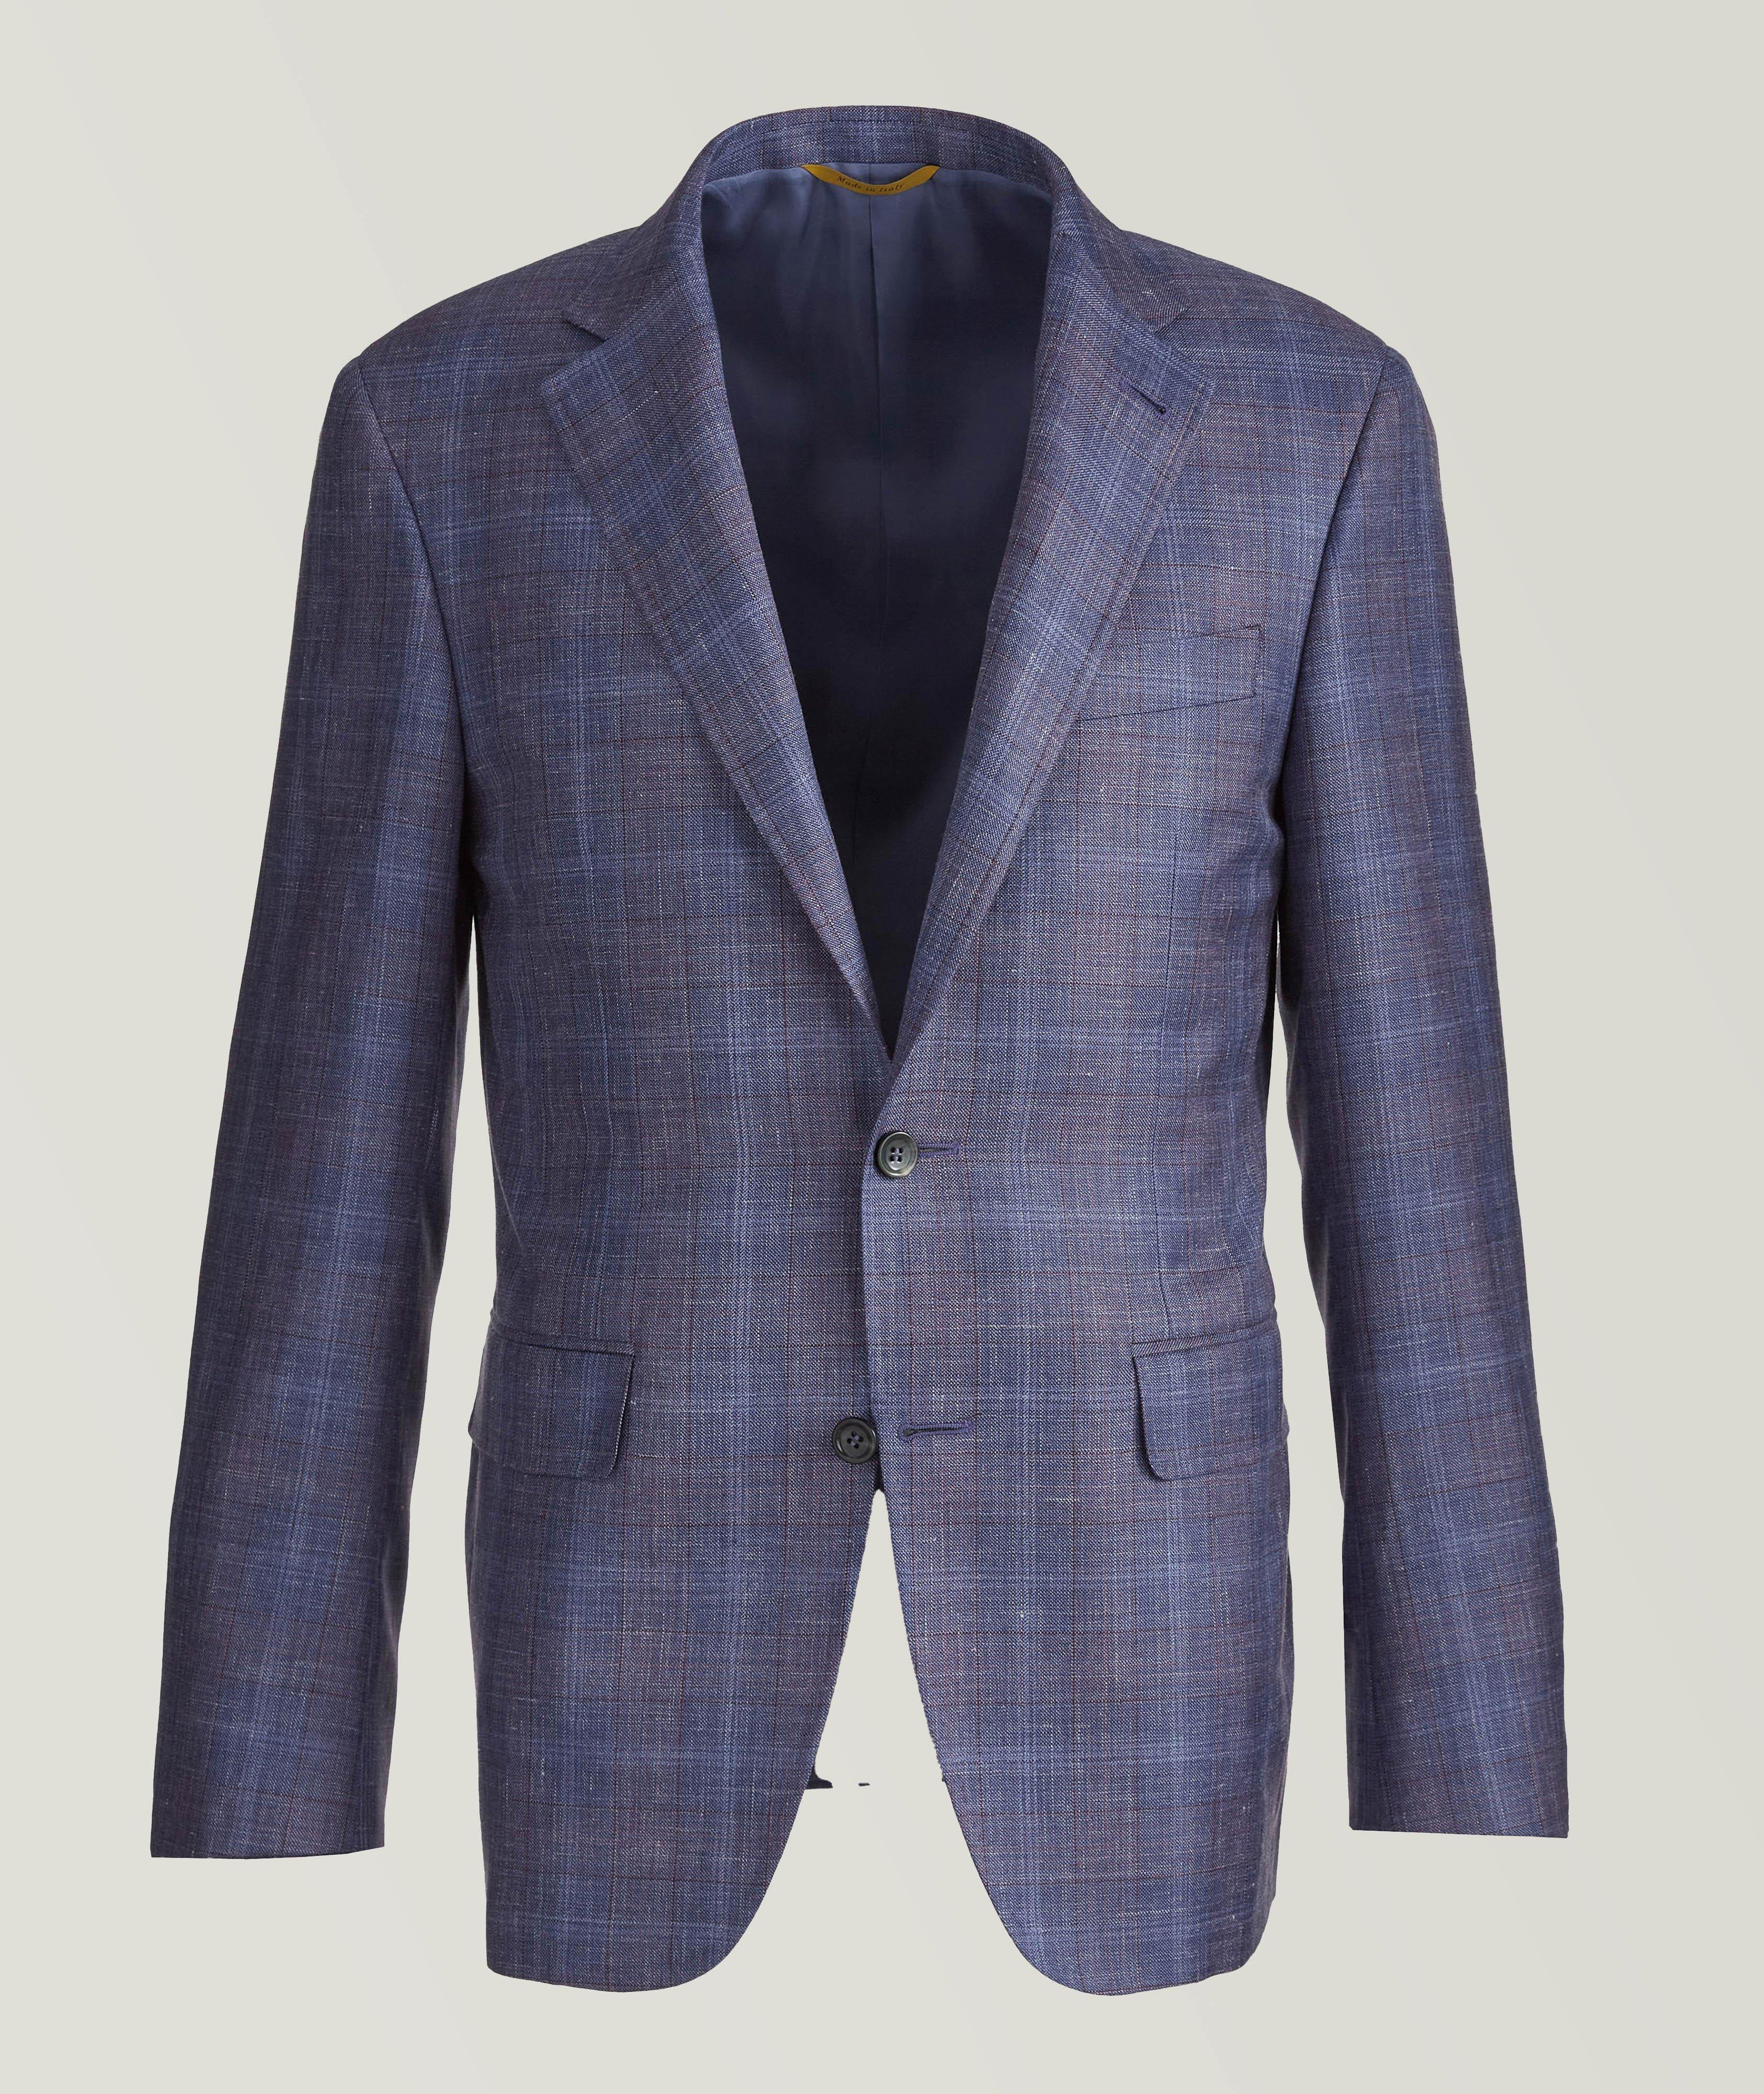 Kei Plaid  Wool, Silk & Linen Sports Jacket image 0